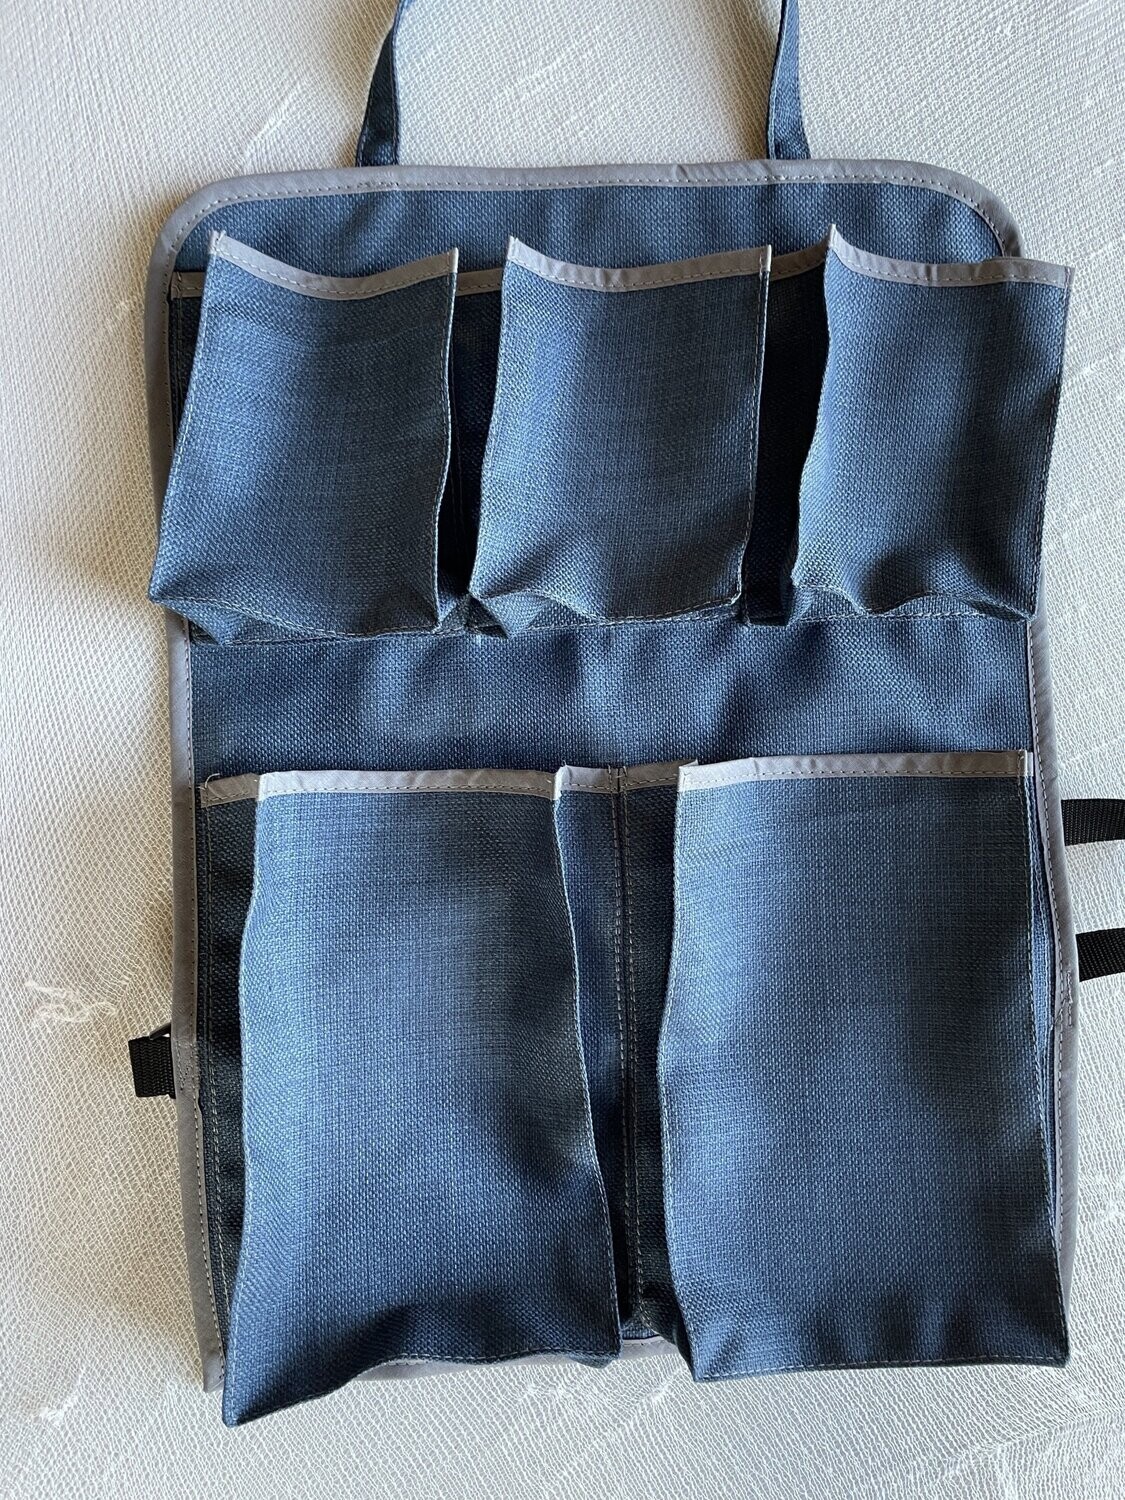 Car Seat Tidy Storage Organiser - Back Seat Car Storage Bag with 5 Pockets